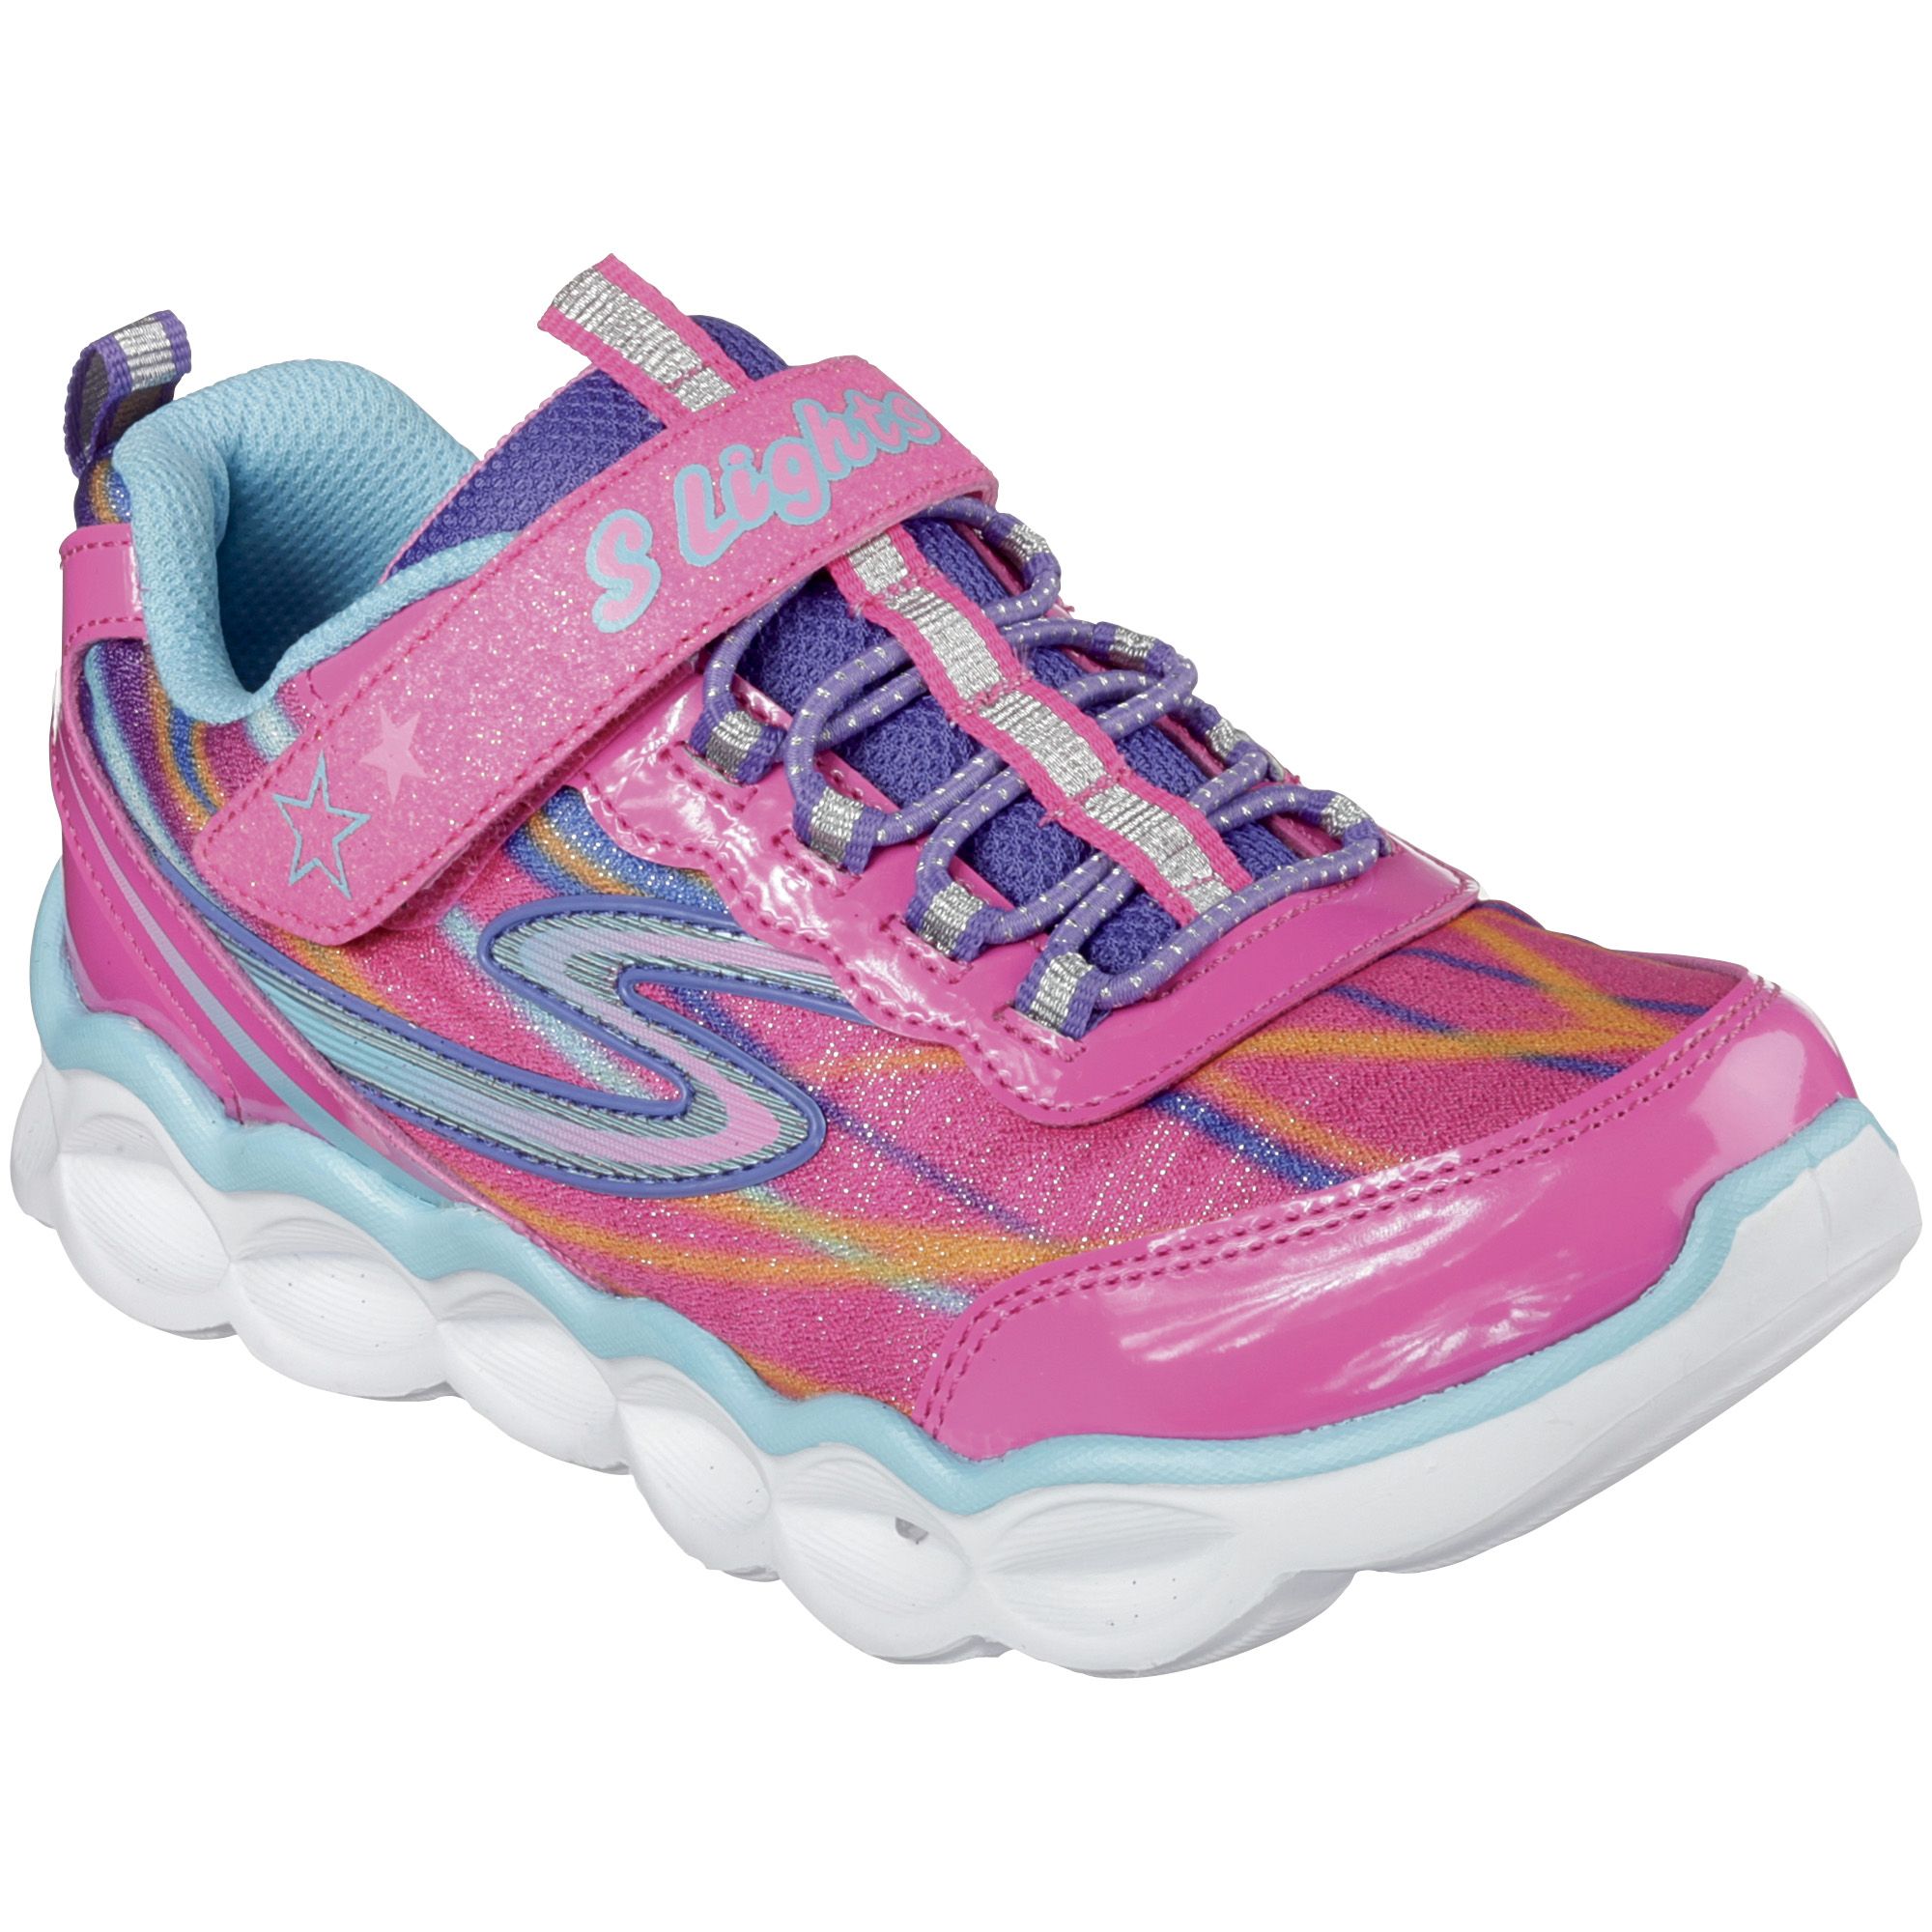 Fingerhut - Girls' Lumos Light-Up Shoes- Hot Pink/Multi